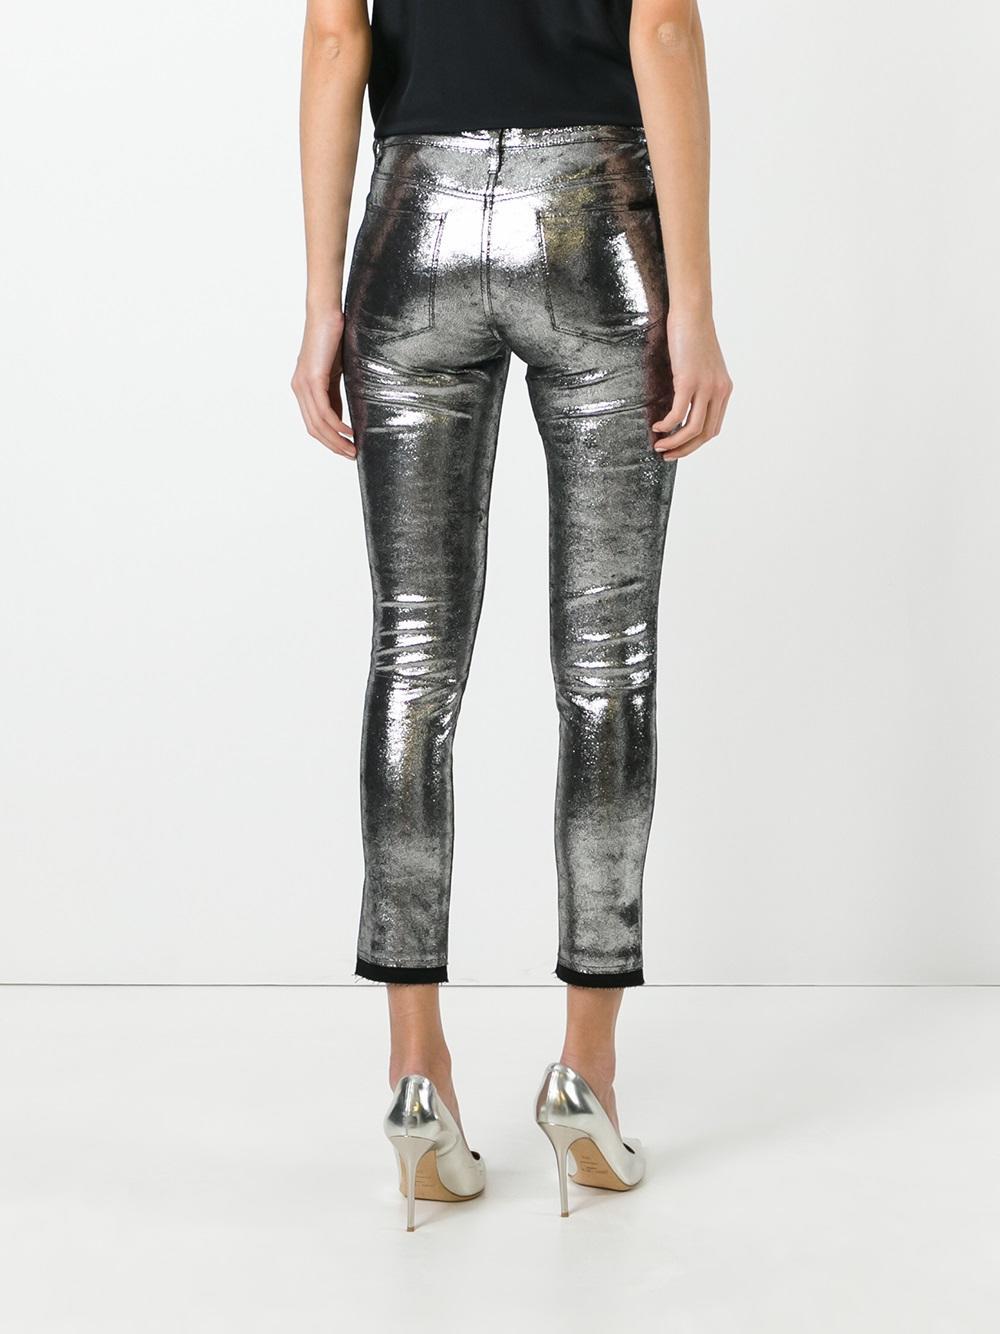 Lyst - Rta Metallic Skinny Jeans in Metallic